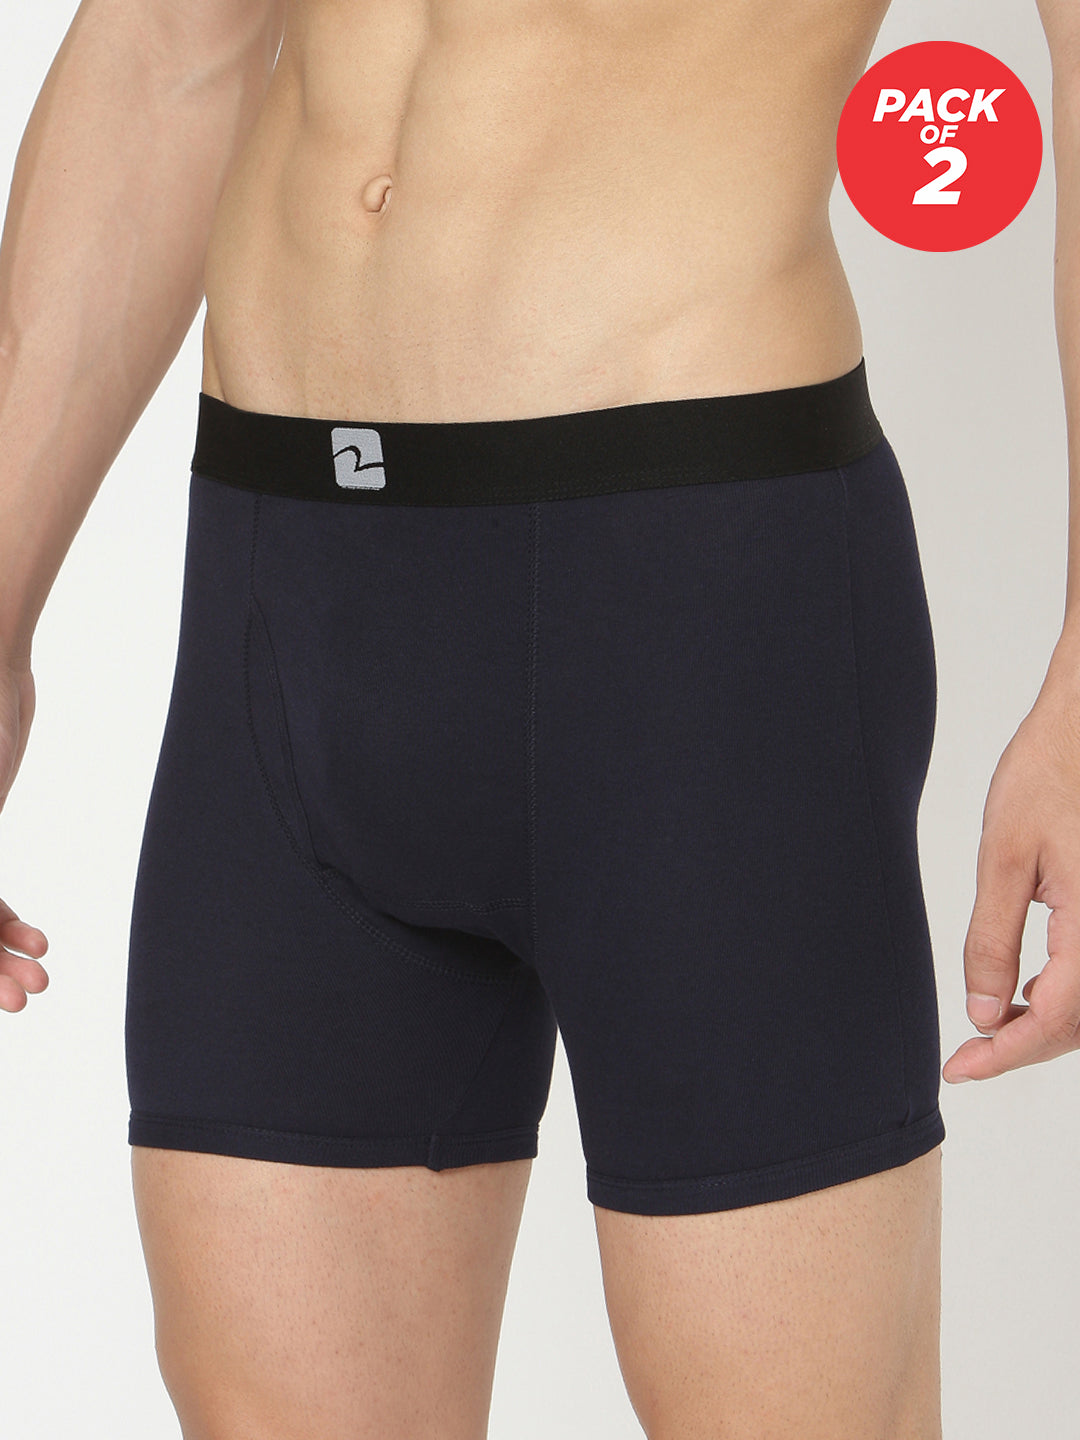 Navy Cotton Trunk for Men Premium (Pack of 2)- UnderJeans by Spykar